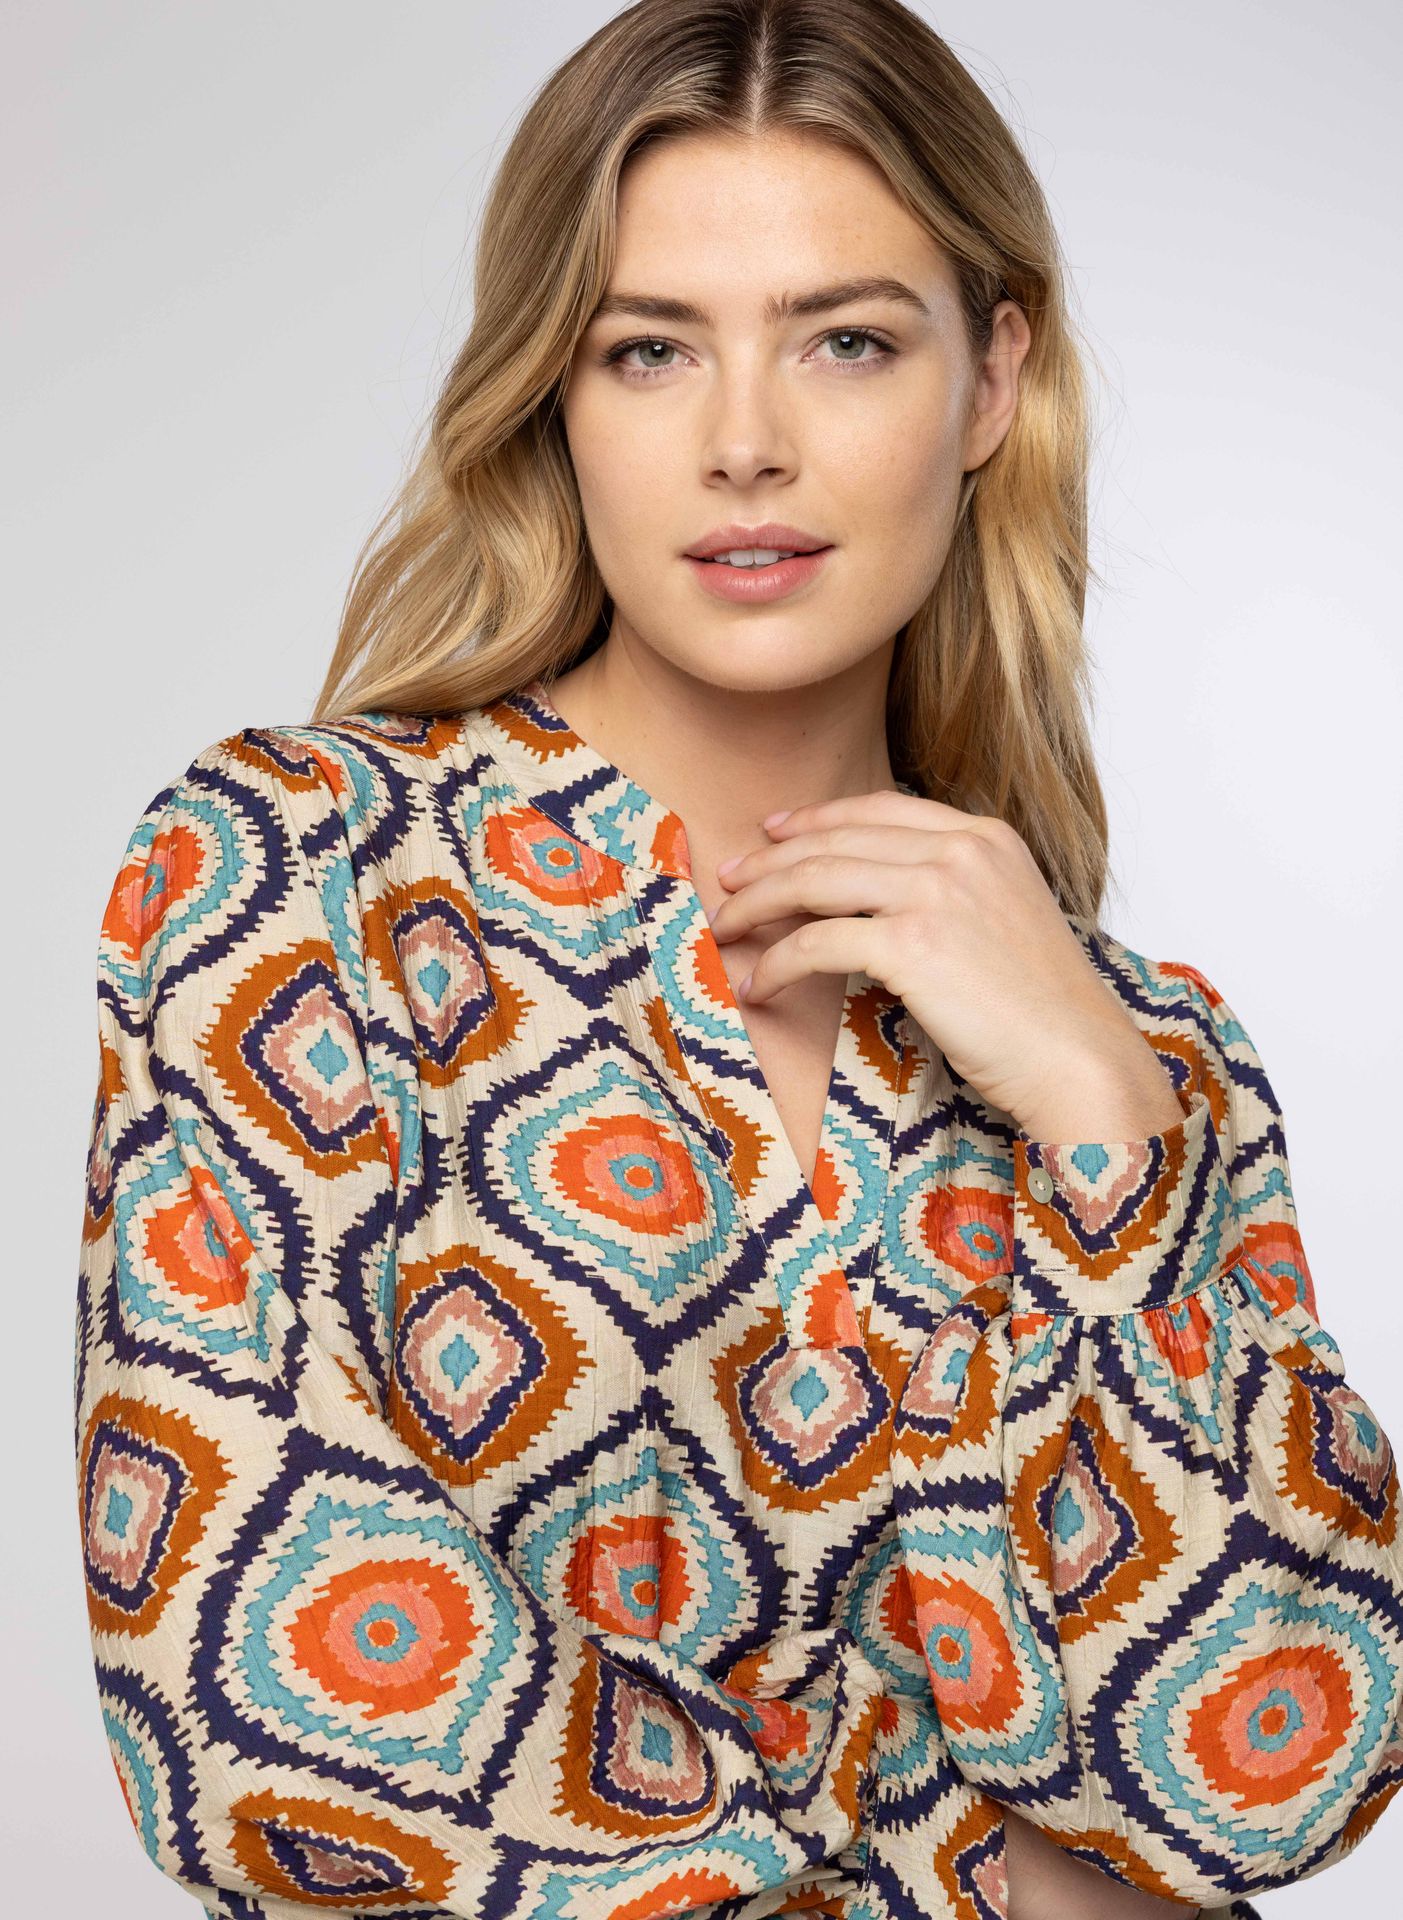 Norah Meerkleurige blouse multicolor 214293-002